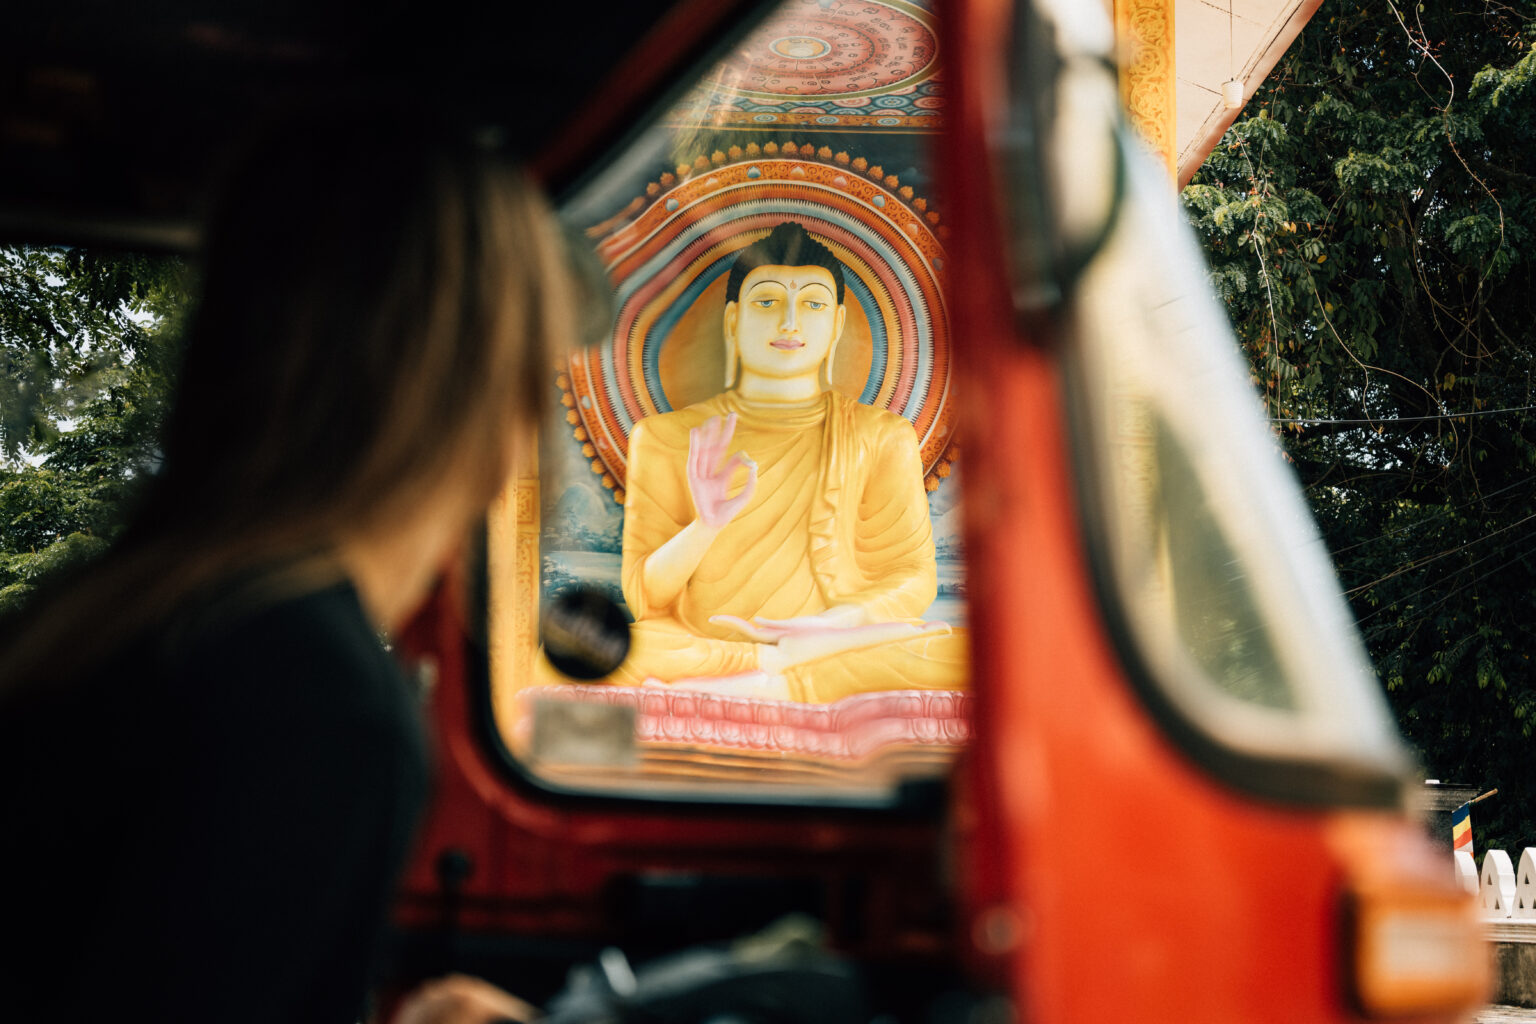 A Buddha statue view from inside of the tuktuk in Hambantota